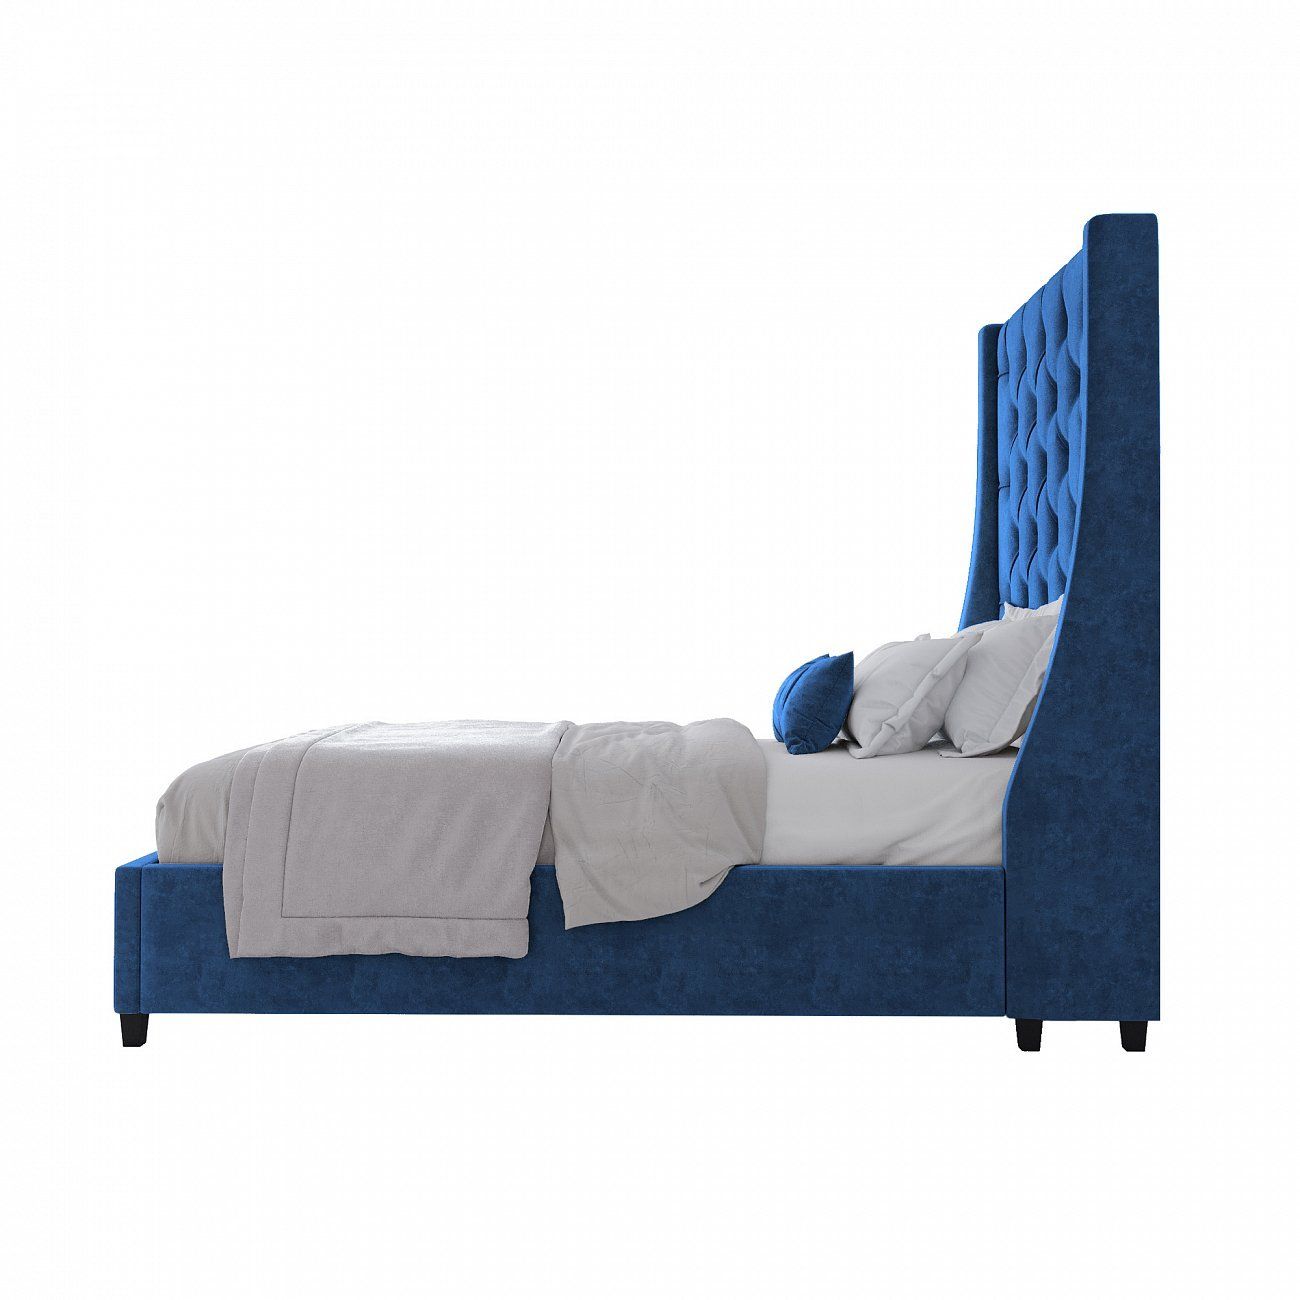 Single bed 90x200 Ada blue MR